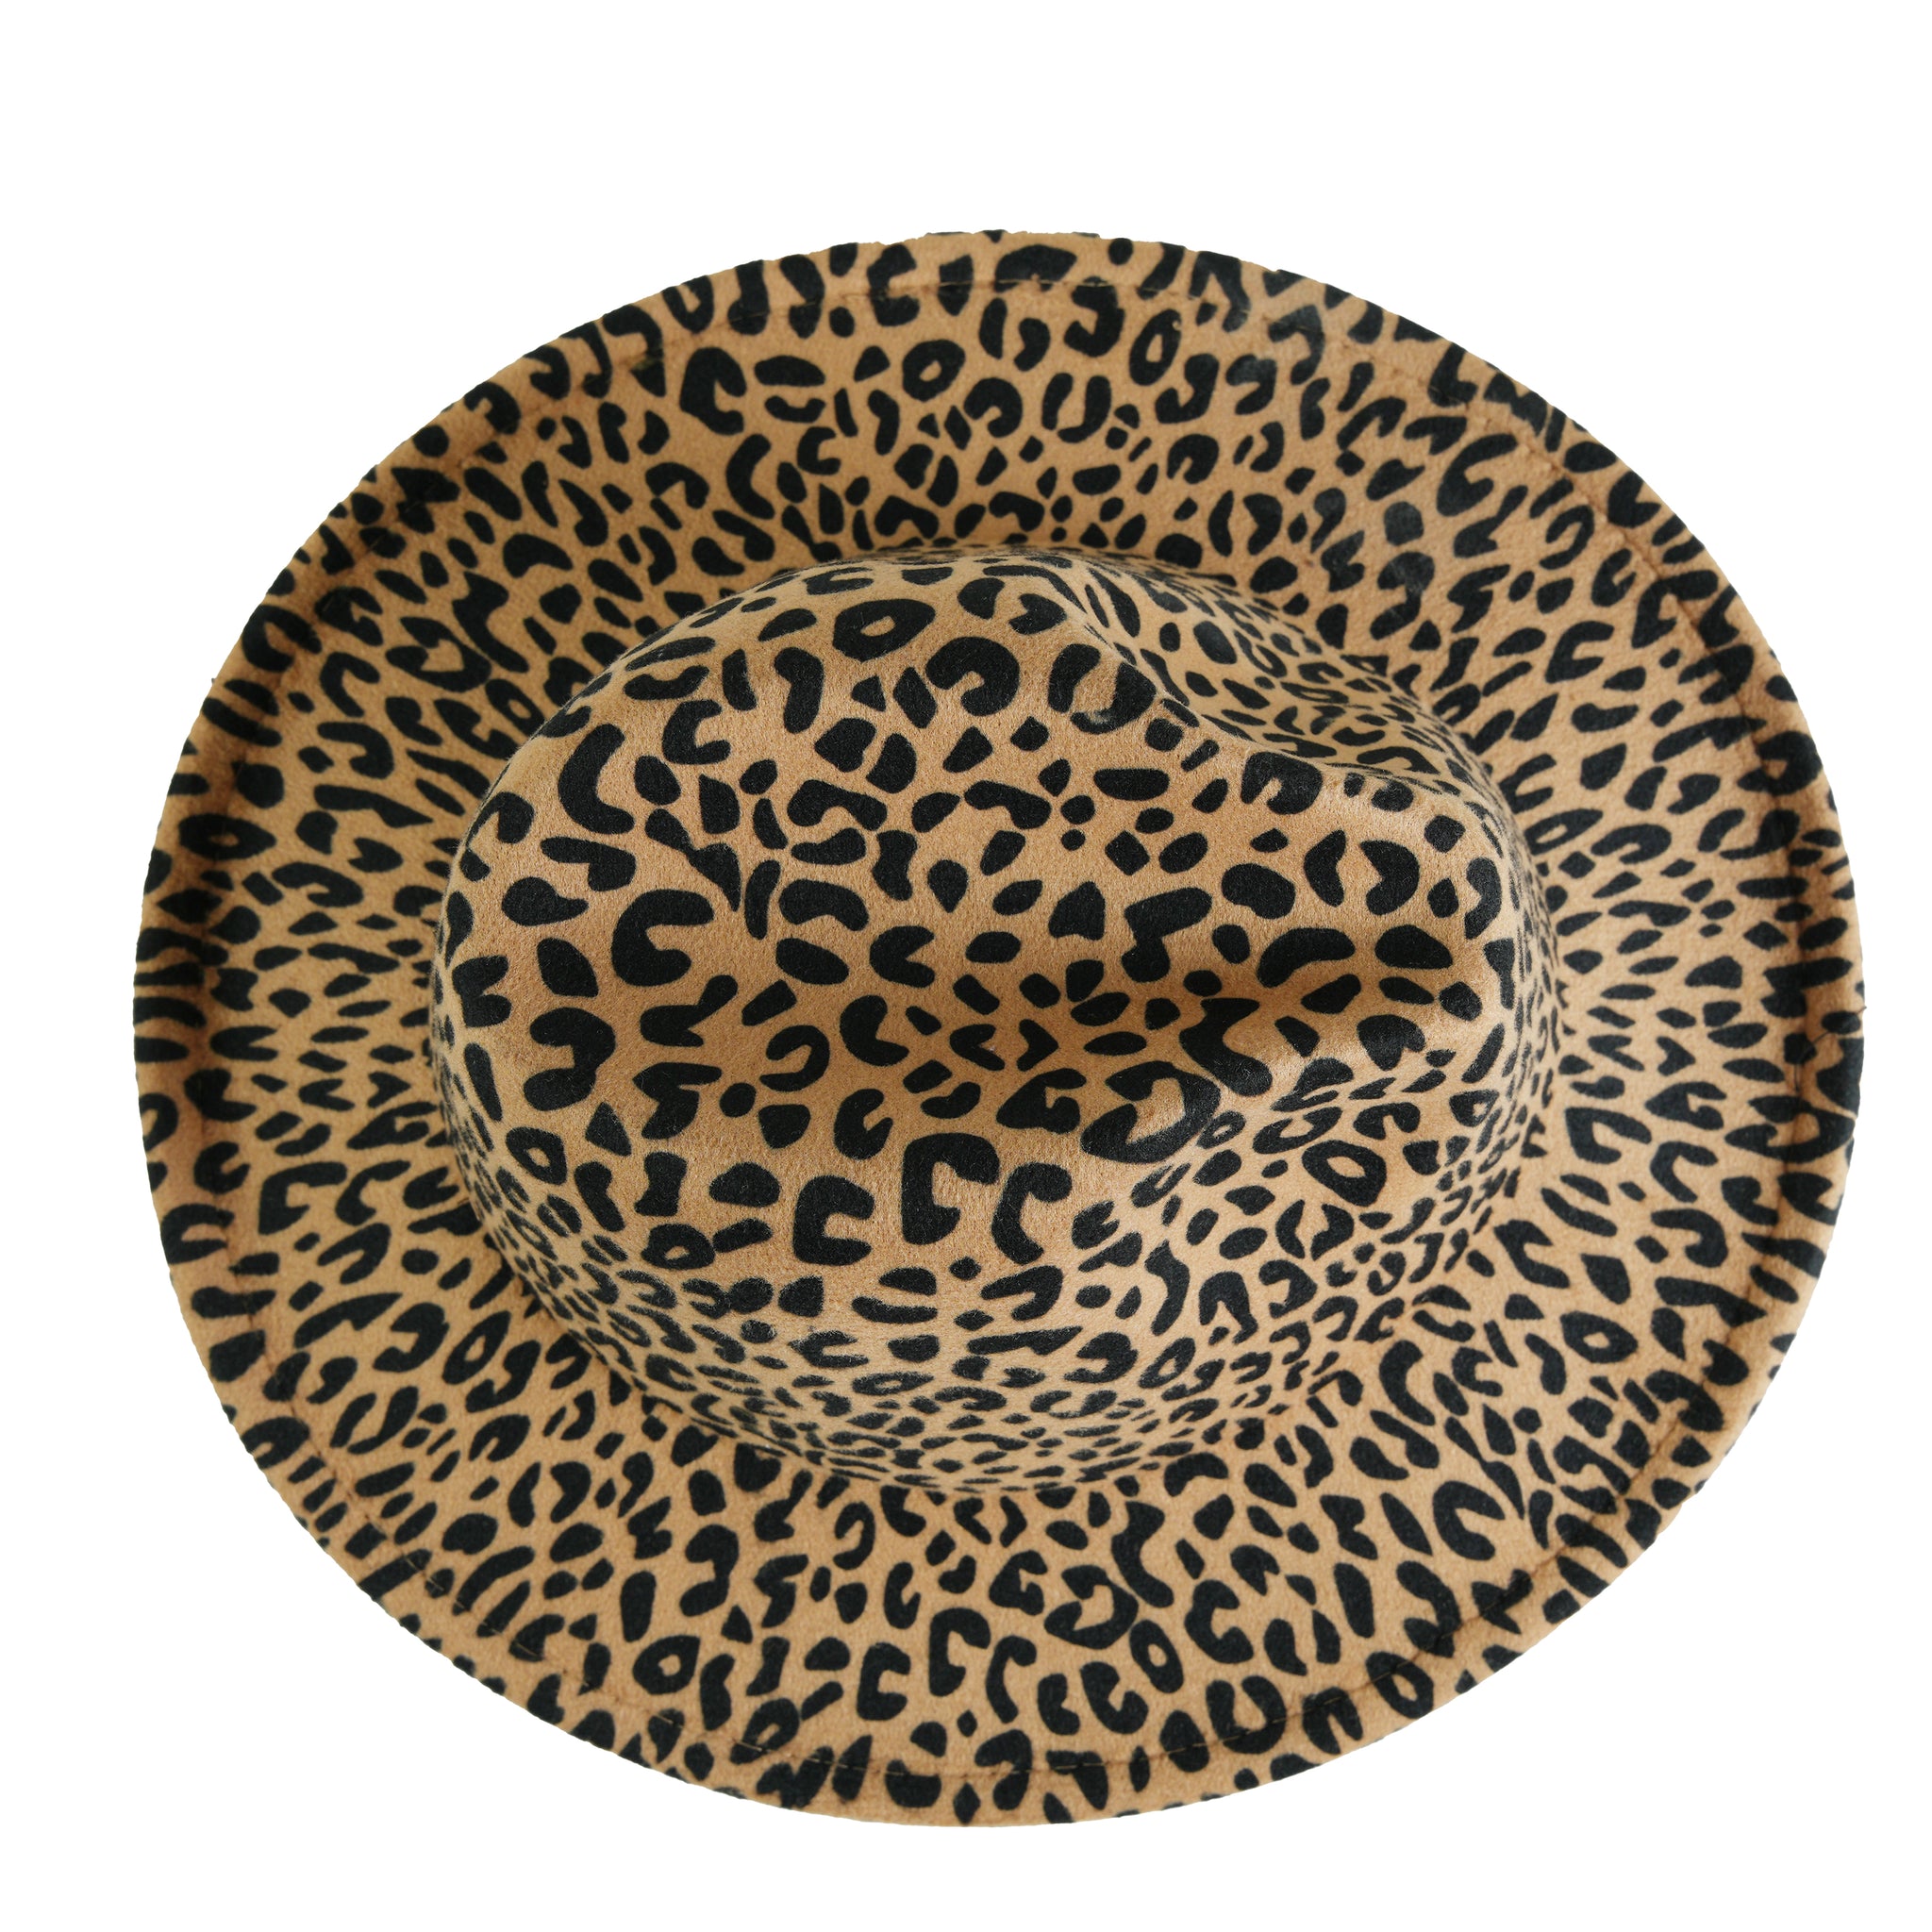 Chokore Leopard Print Fedora Hat (Black & Beige)